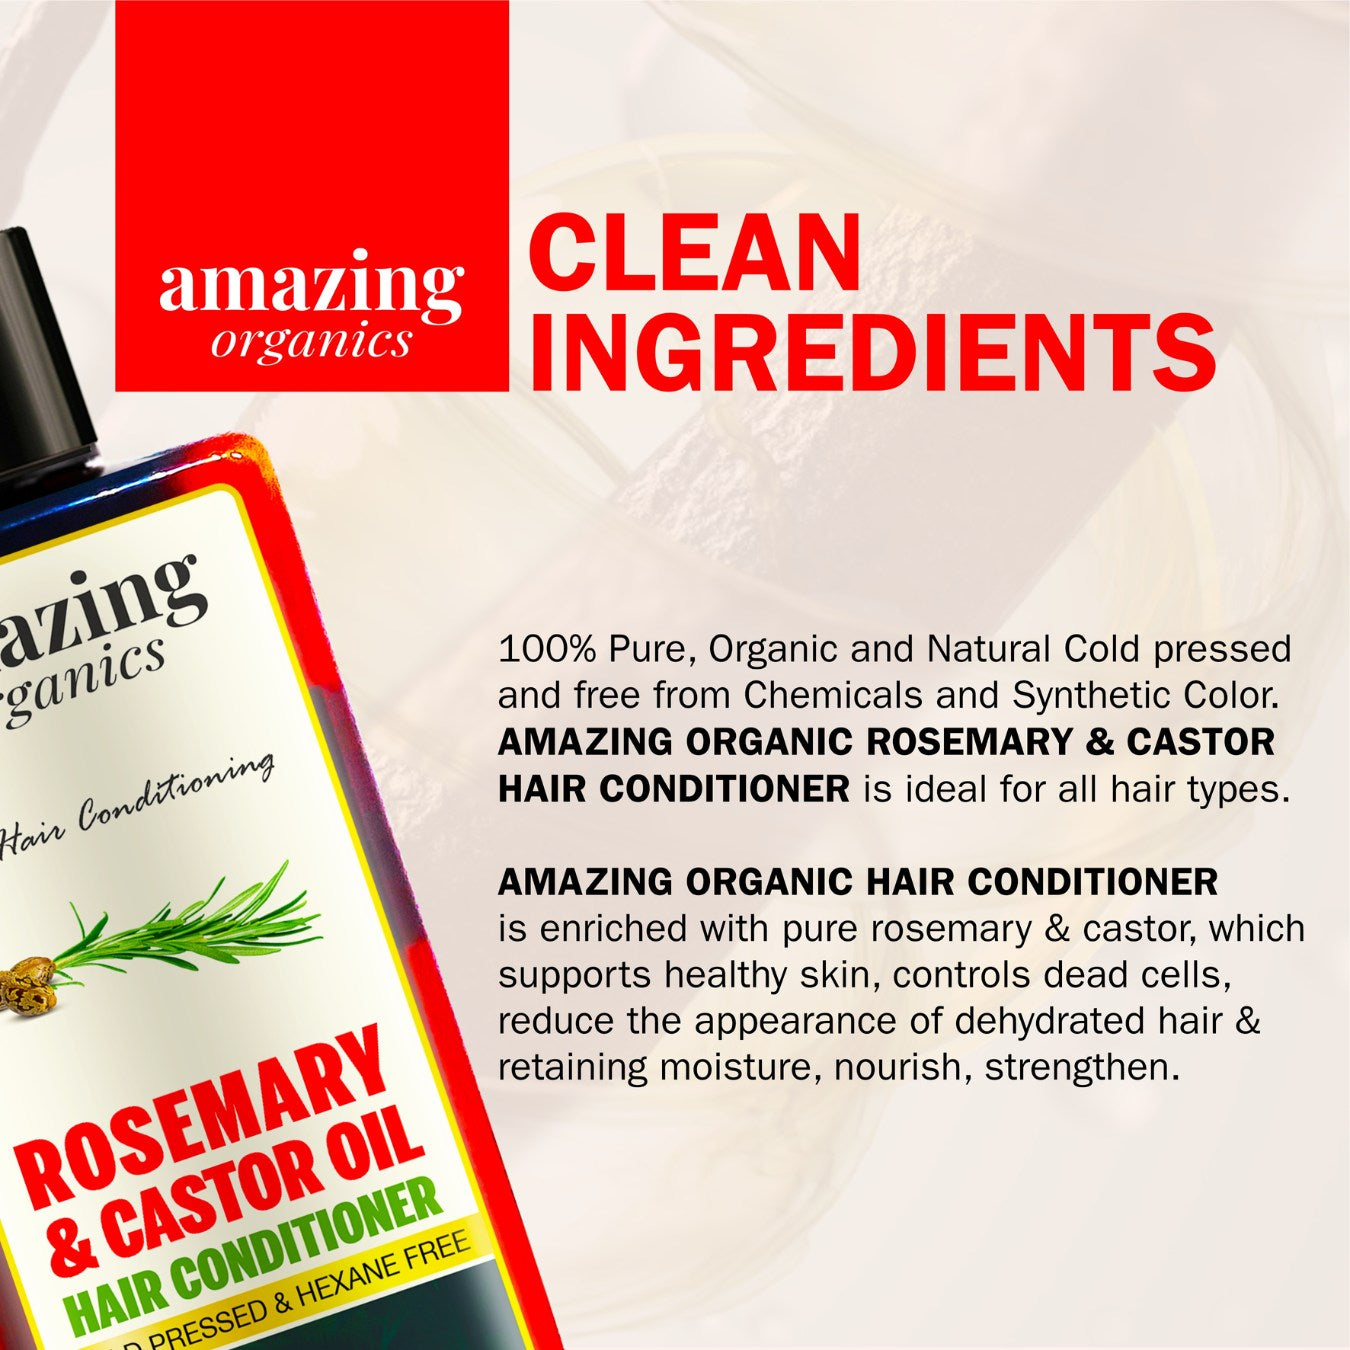 Rosemary & Castor Oil Hair Conditoner